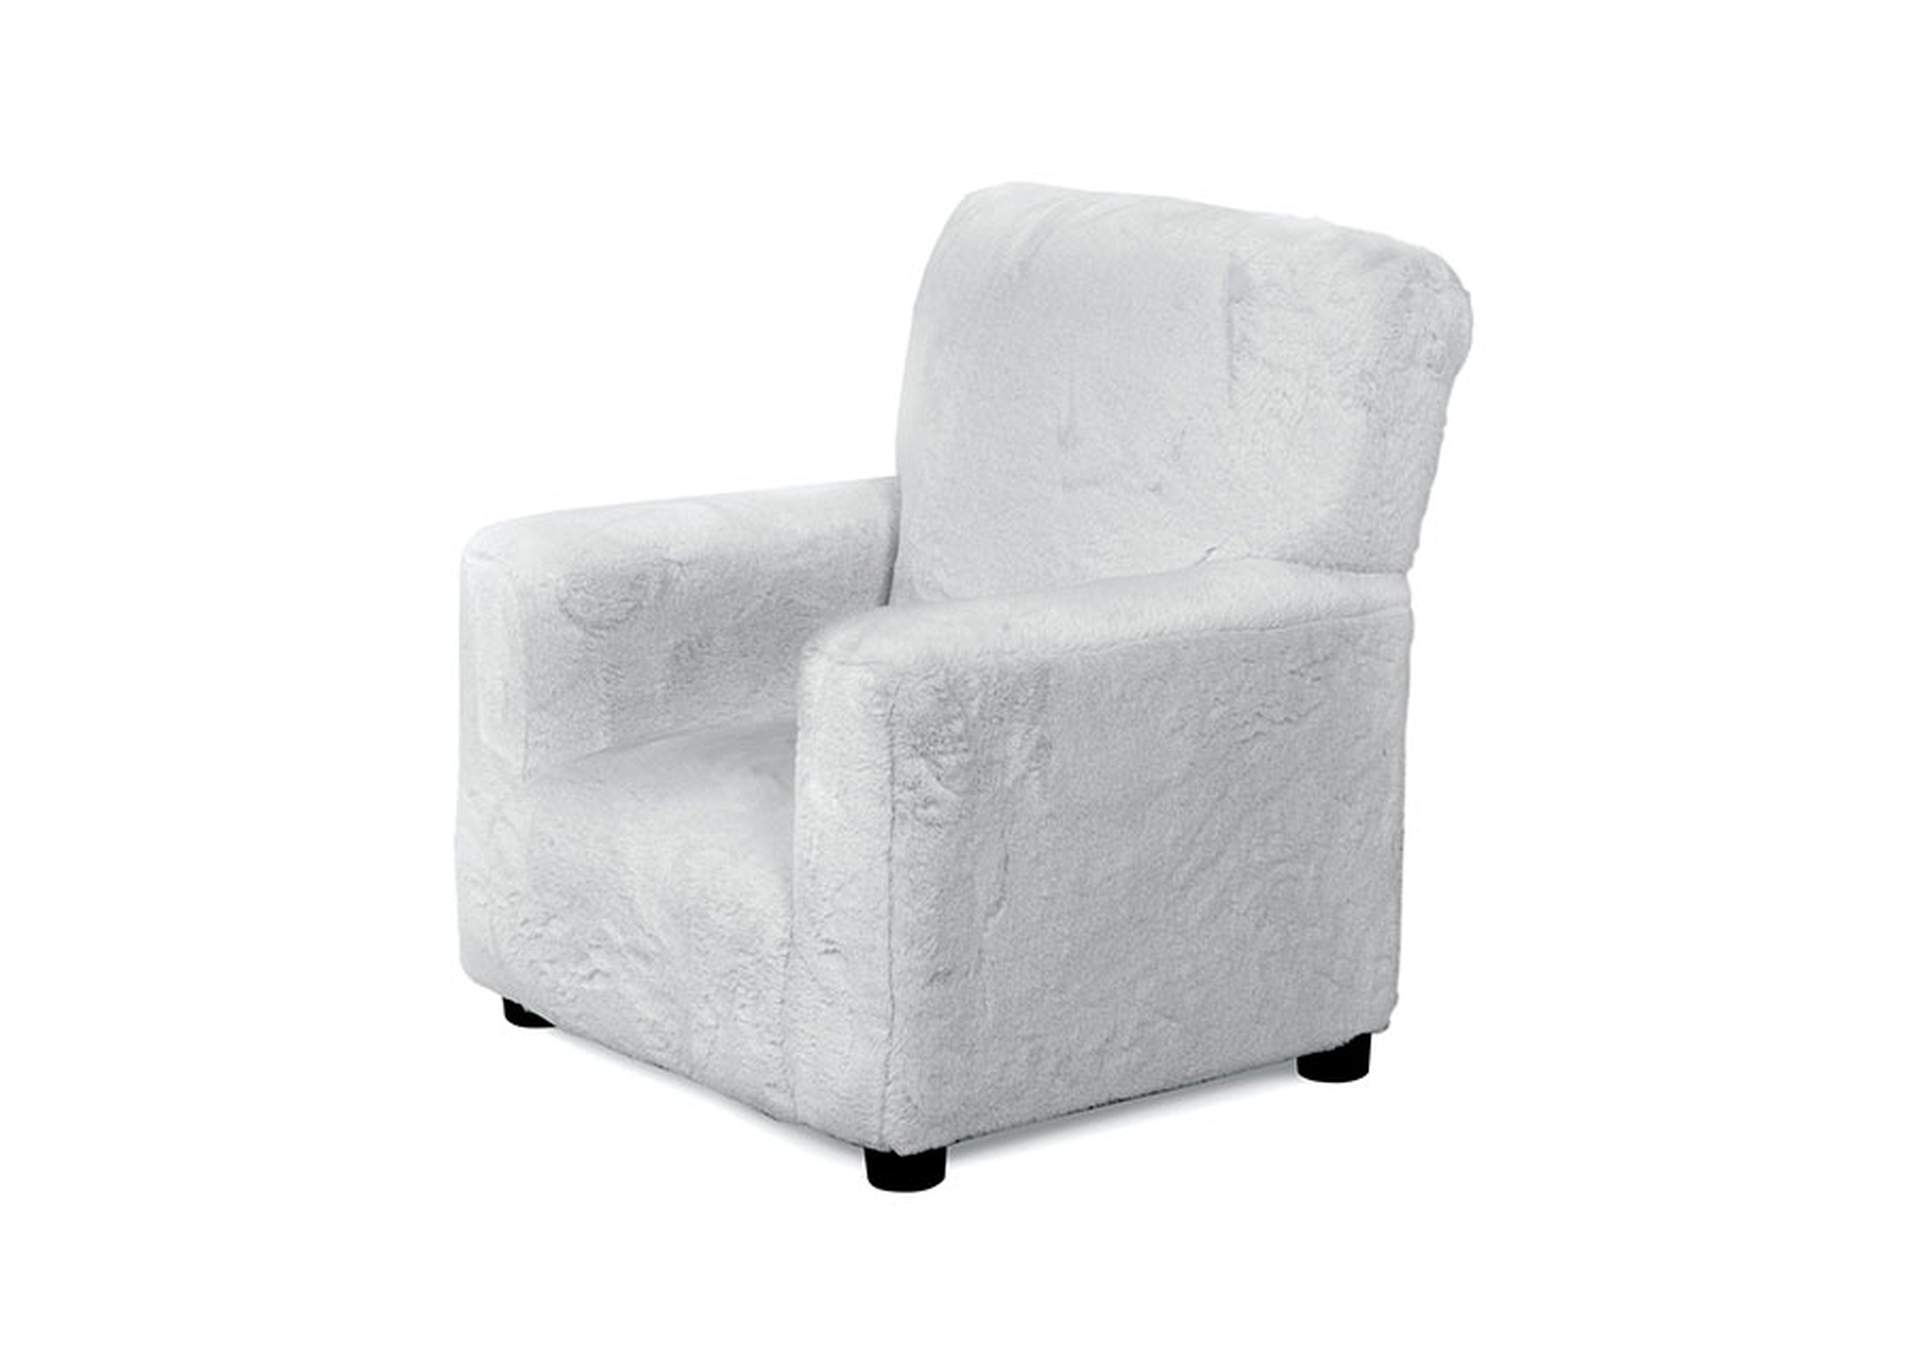 Roxy Kids Chair,Furniture of America